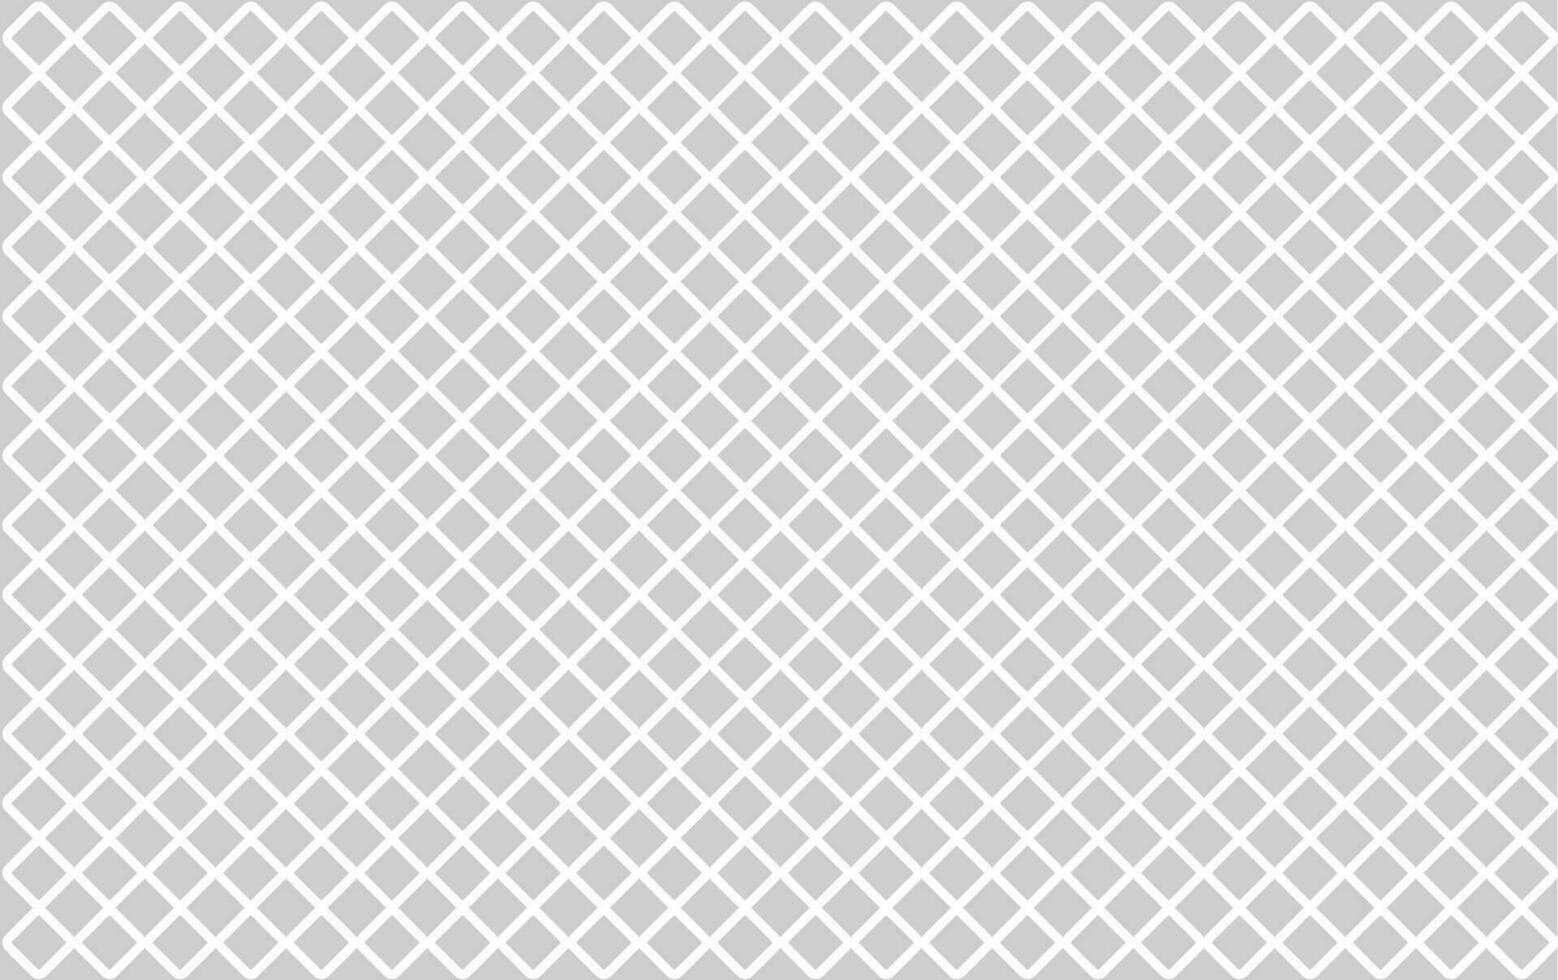 fabric modern minimal pattern background. geometric diamond tile minimal pattern. seamless texture.  Squares Diagonal rectangular, rectangle grid, mesh graph paper pattern. 45 degree draft vector